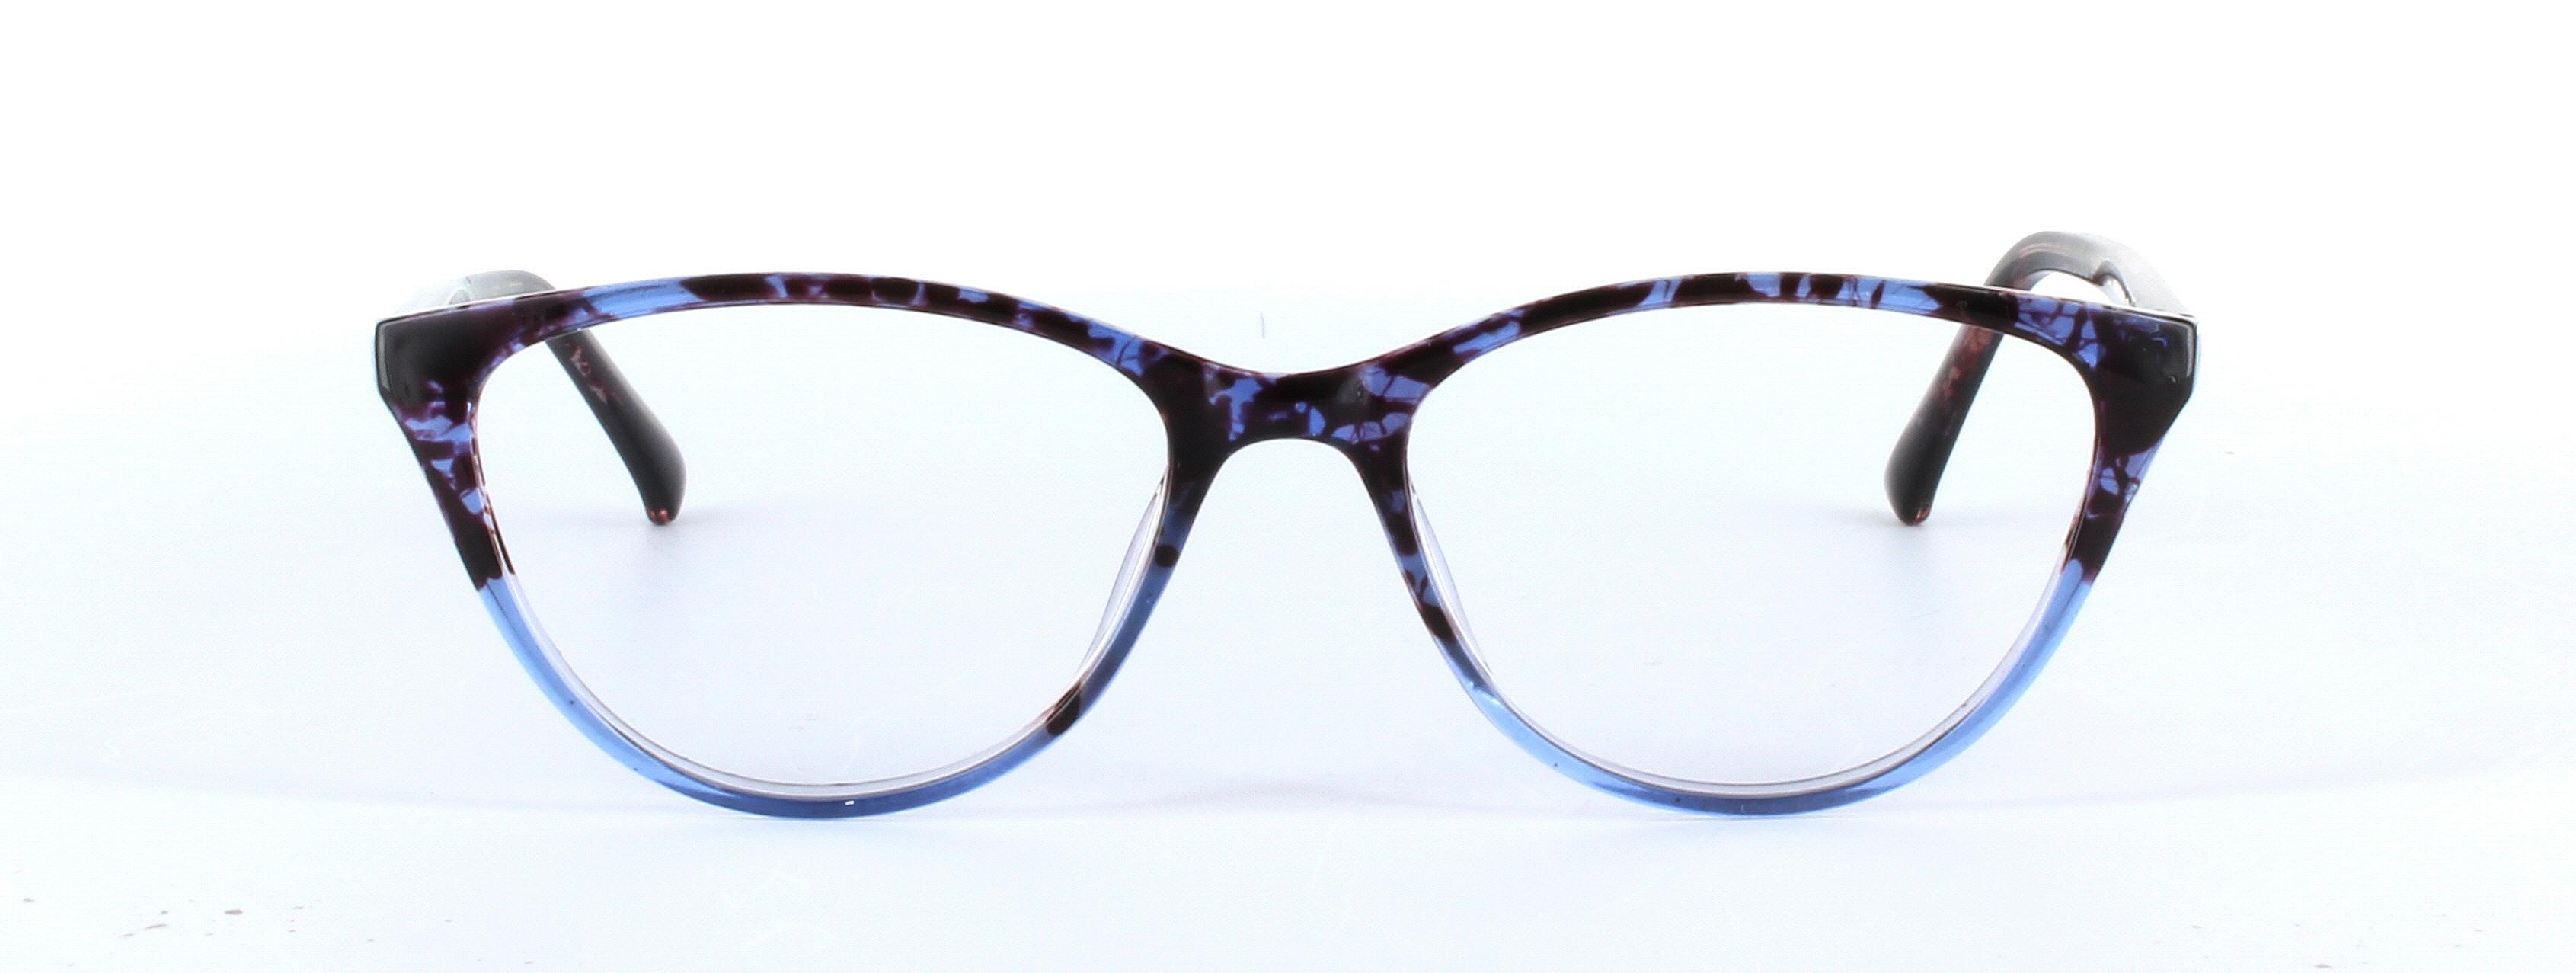 Copious Blue Full Rim Oval Round Plastic Glasses - Image View 5